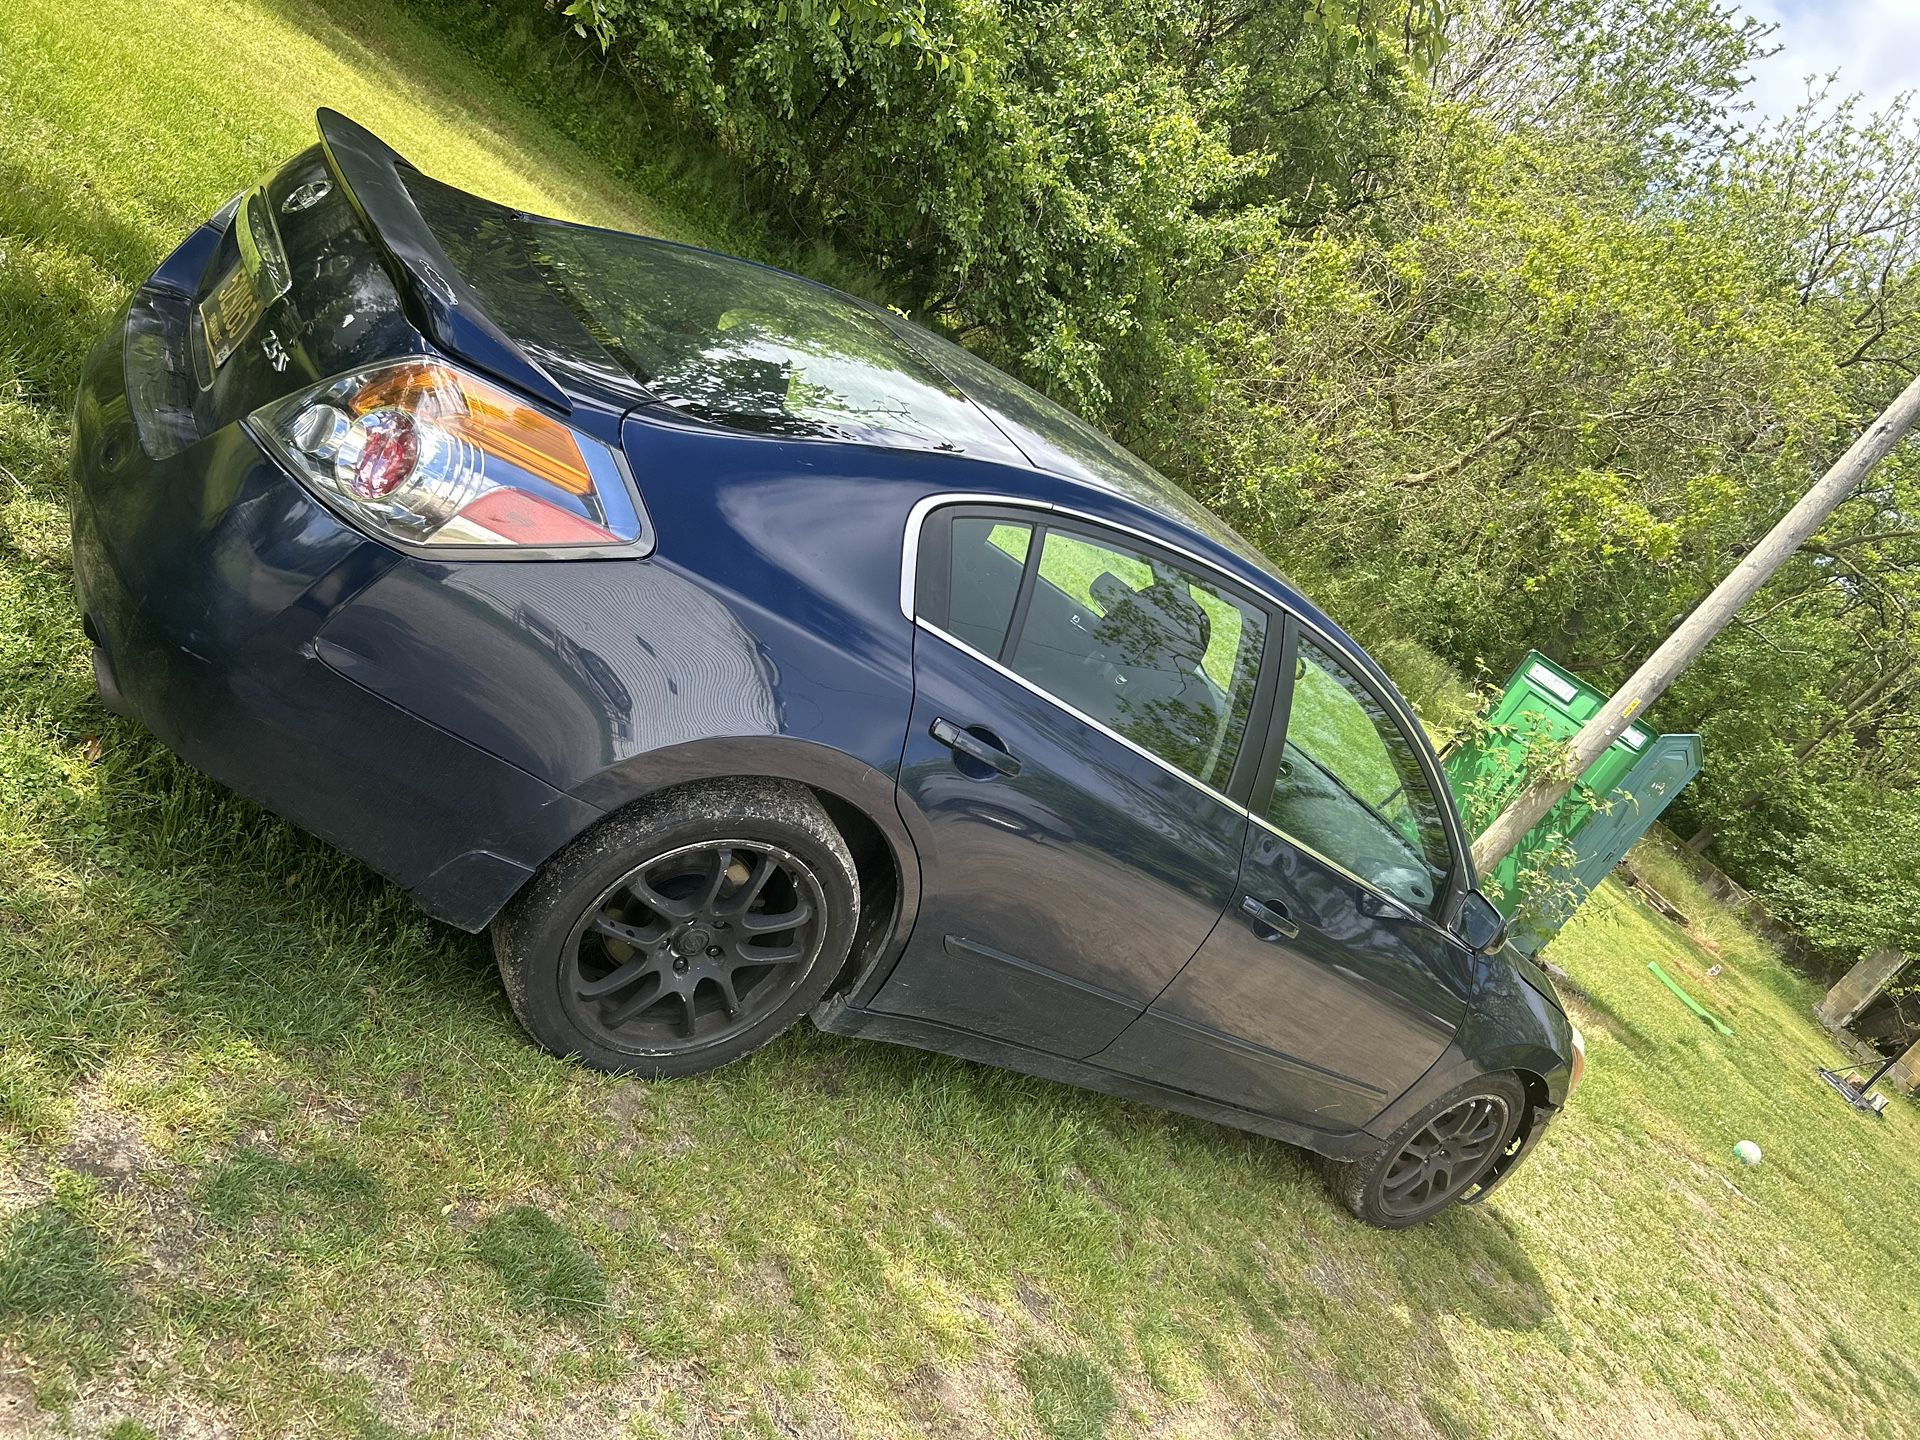 2011 Nissan Altima